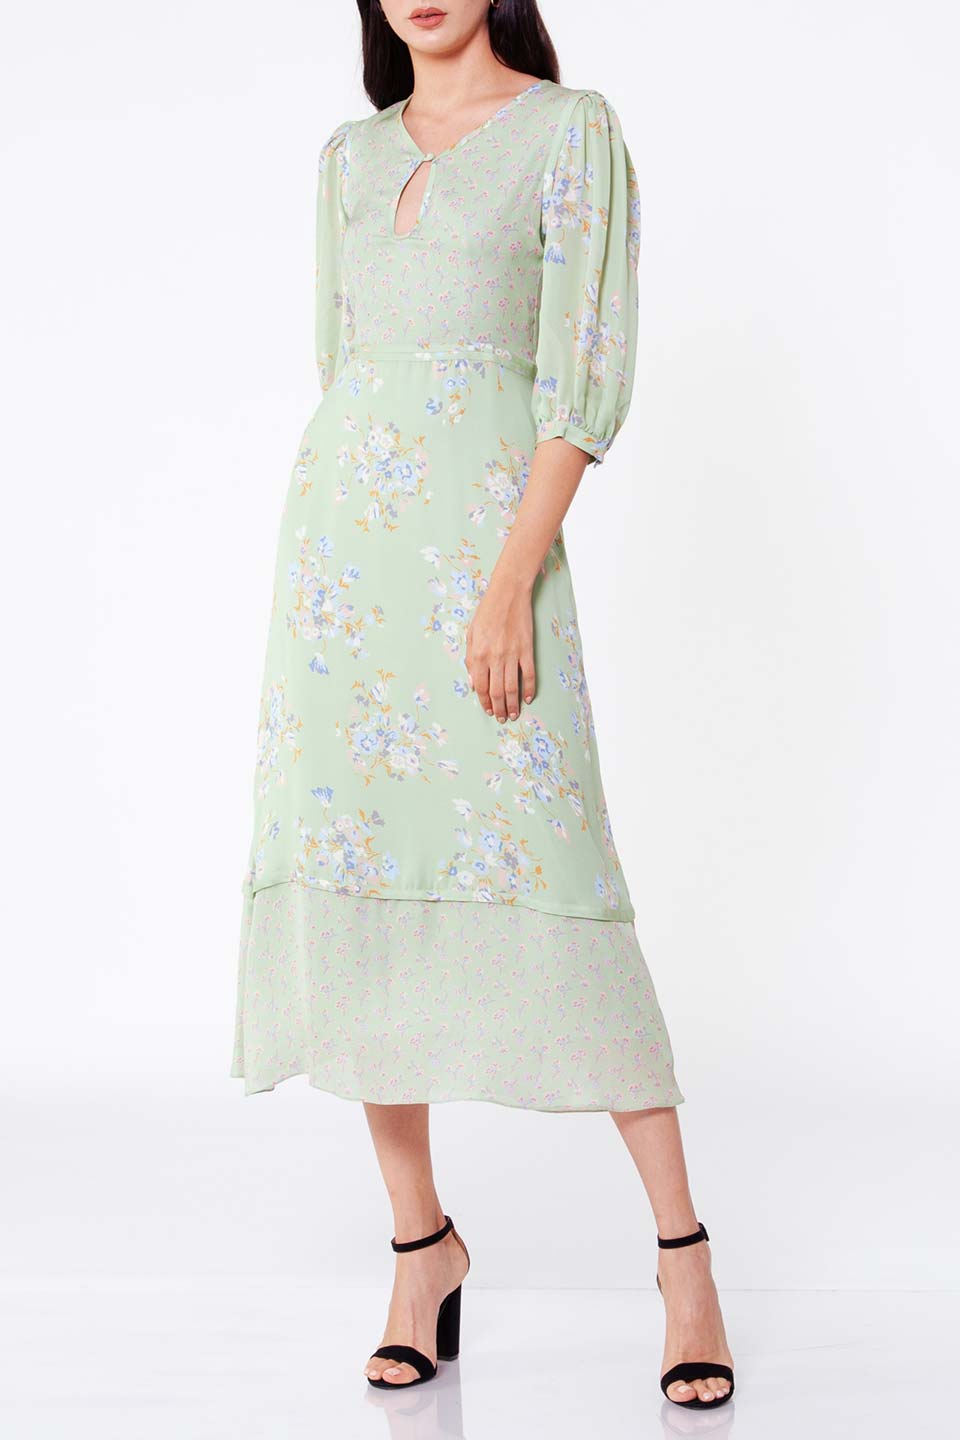 Shop online trendy Green Midi dresses from Vilshenko Fashion designer. Product gallery 1